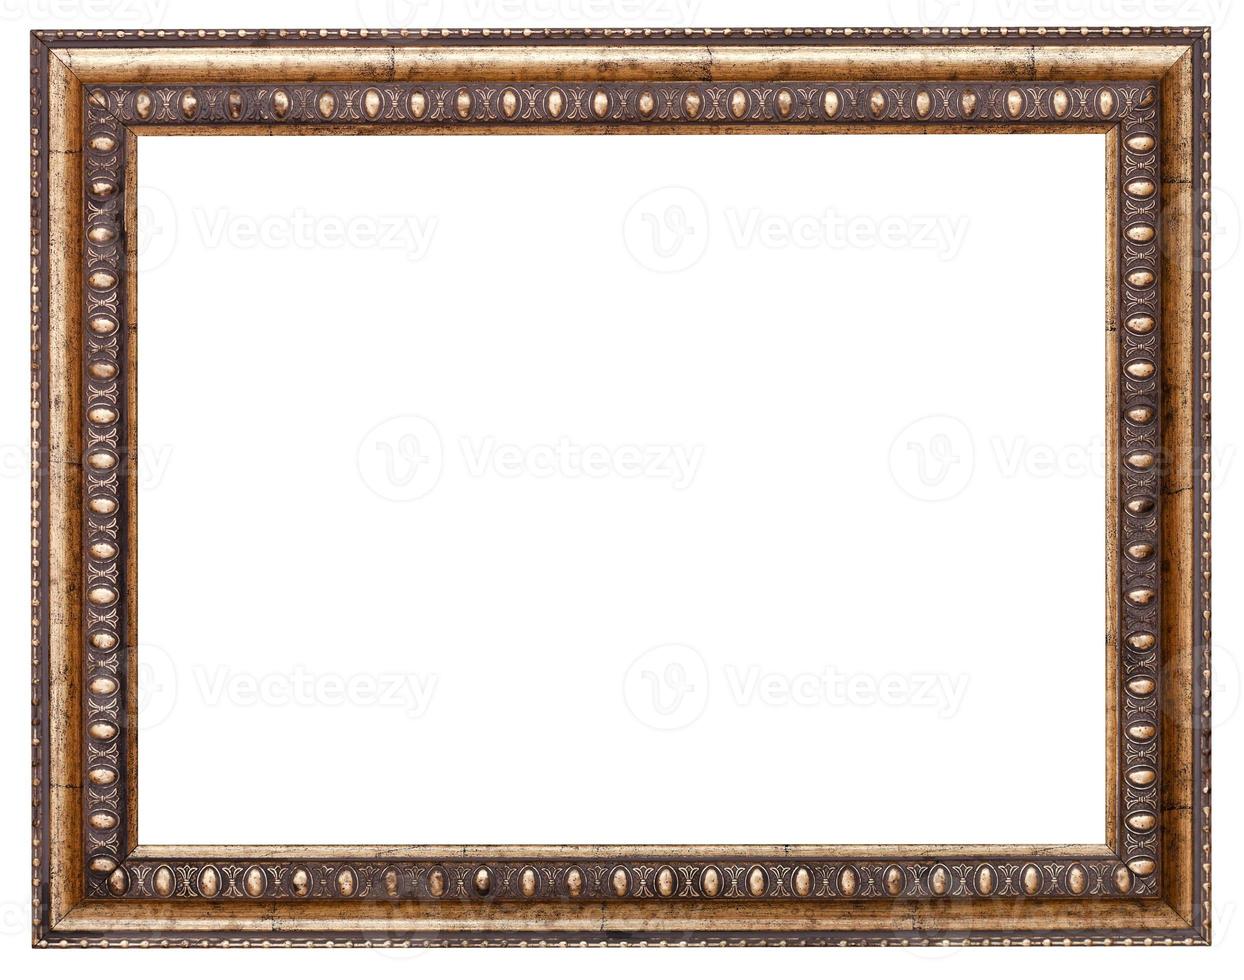 porta-retrato estilo barroco com tela recortada foto